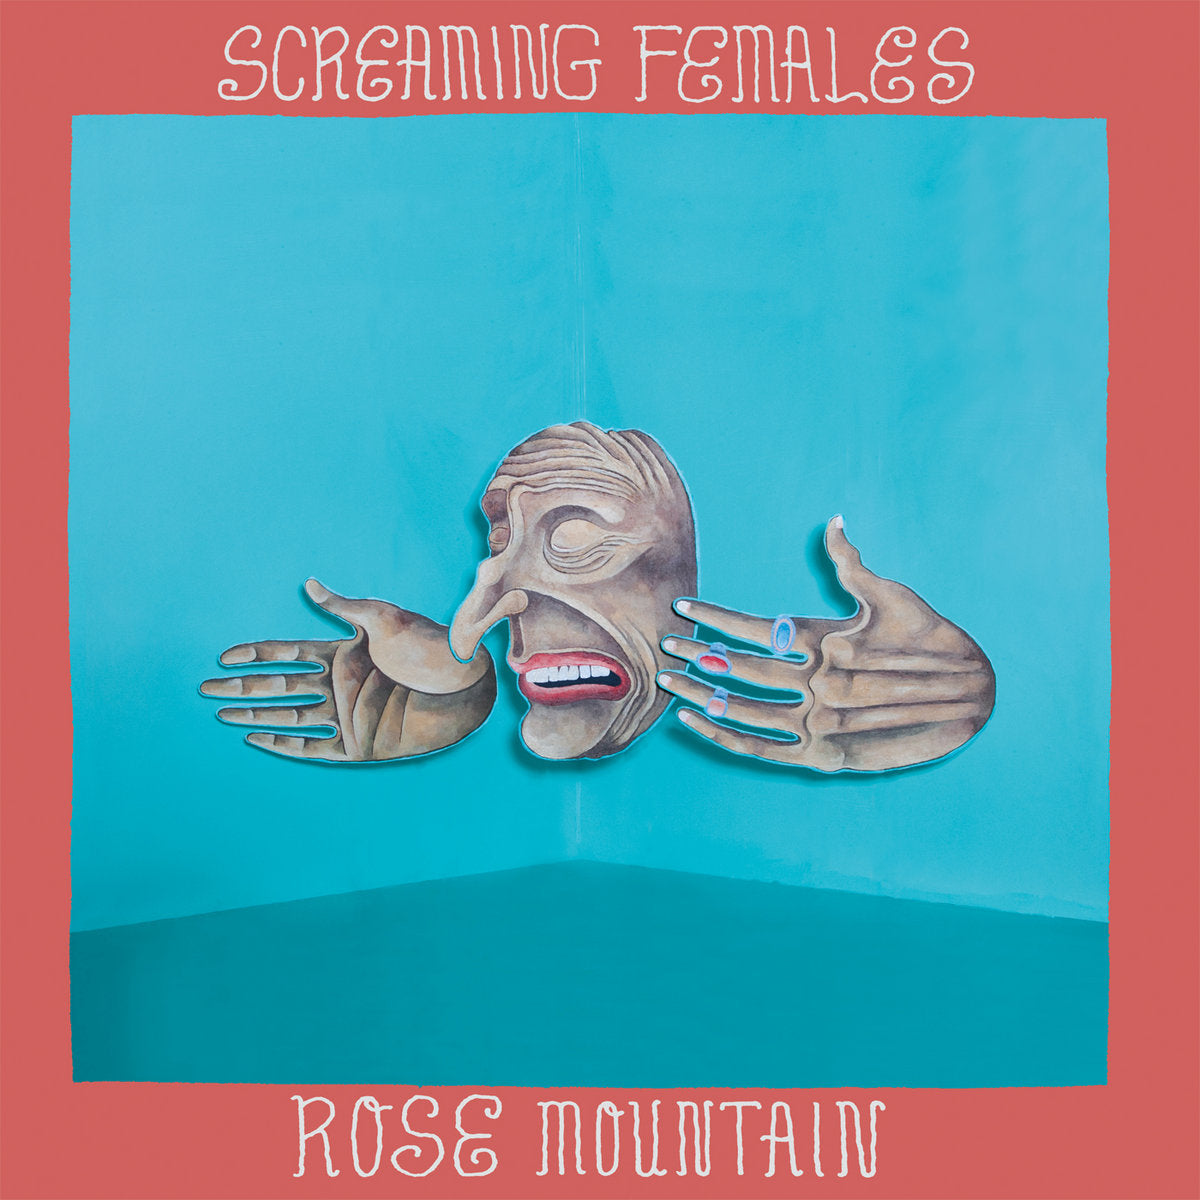 Screaming Females "Rose Mountain" 12" Vinyl